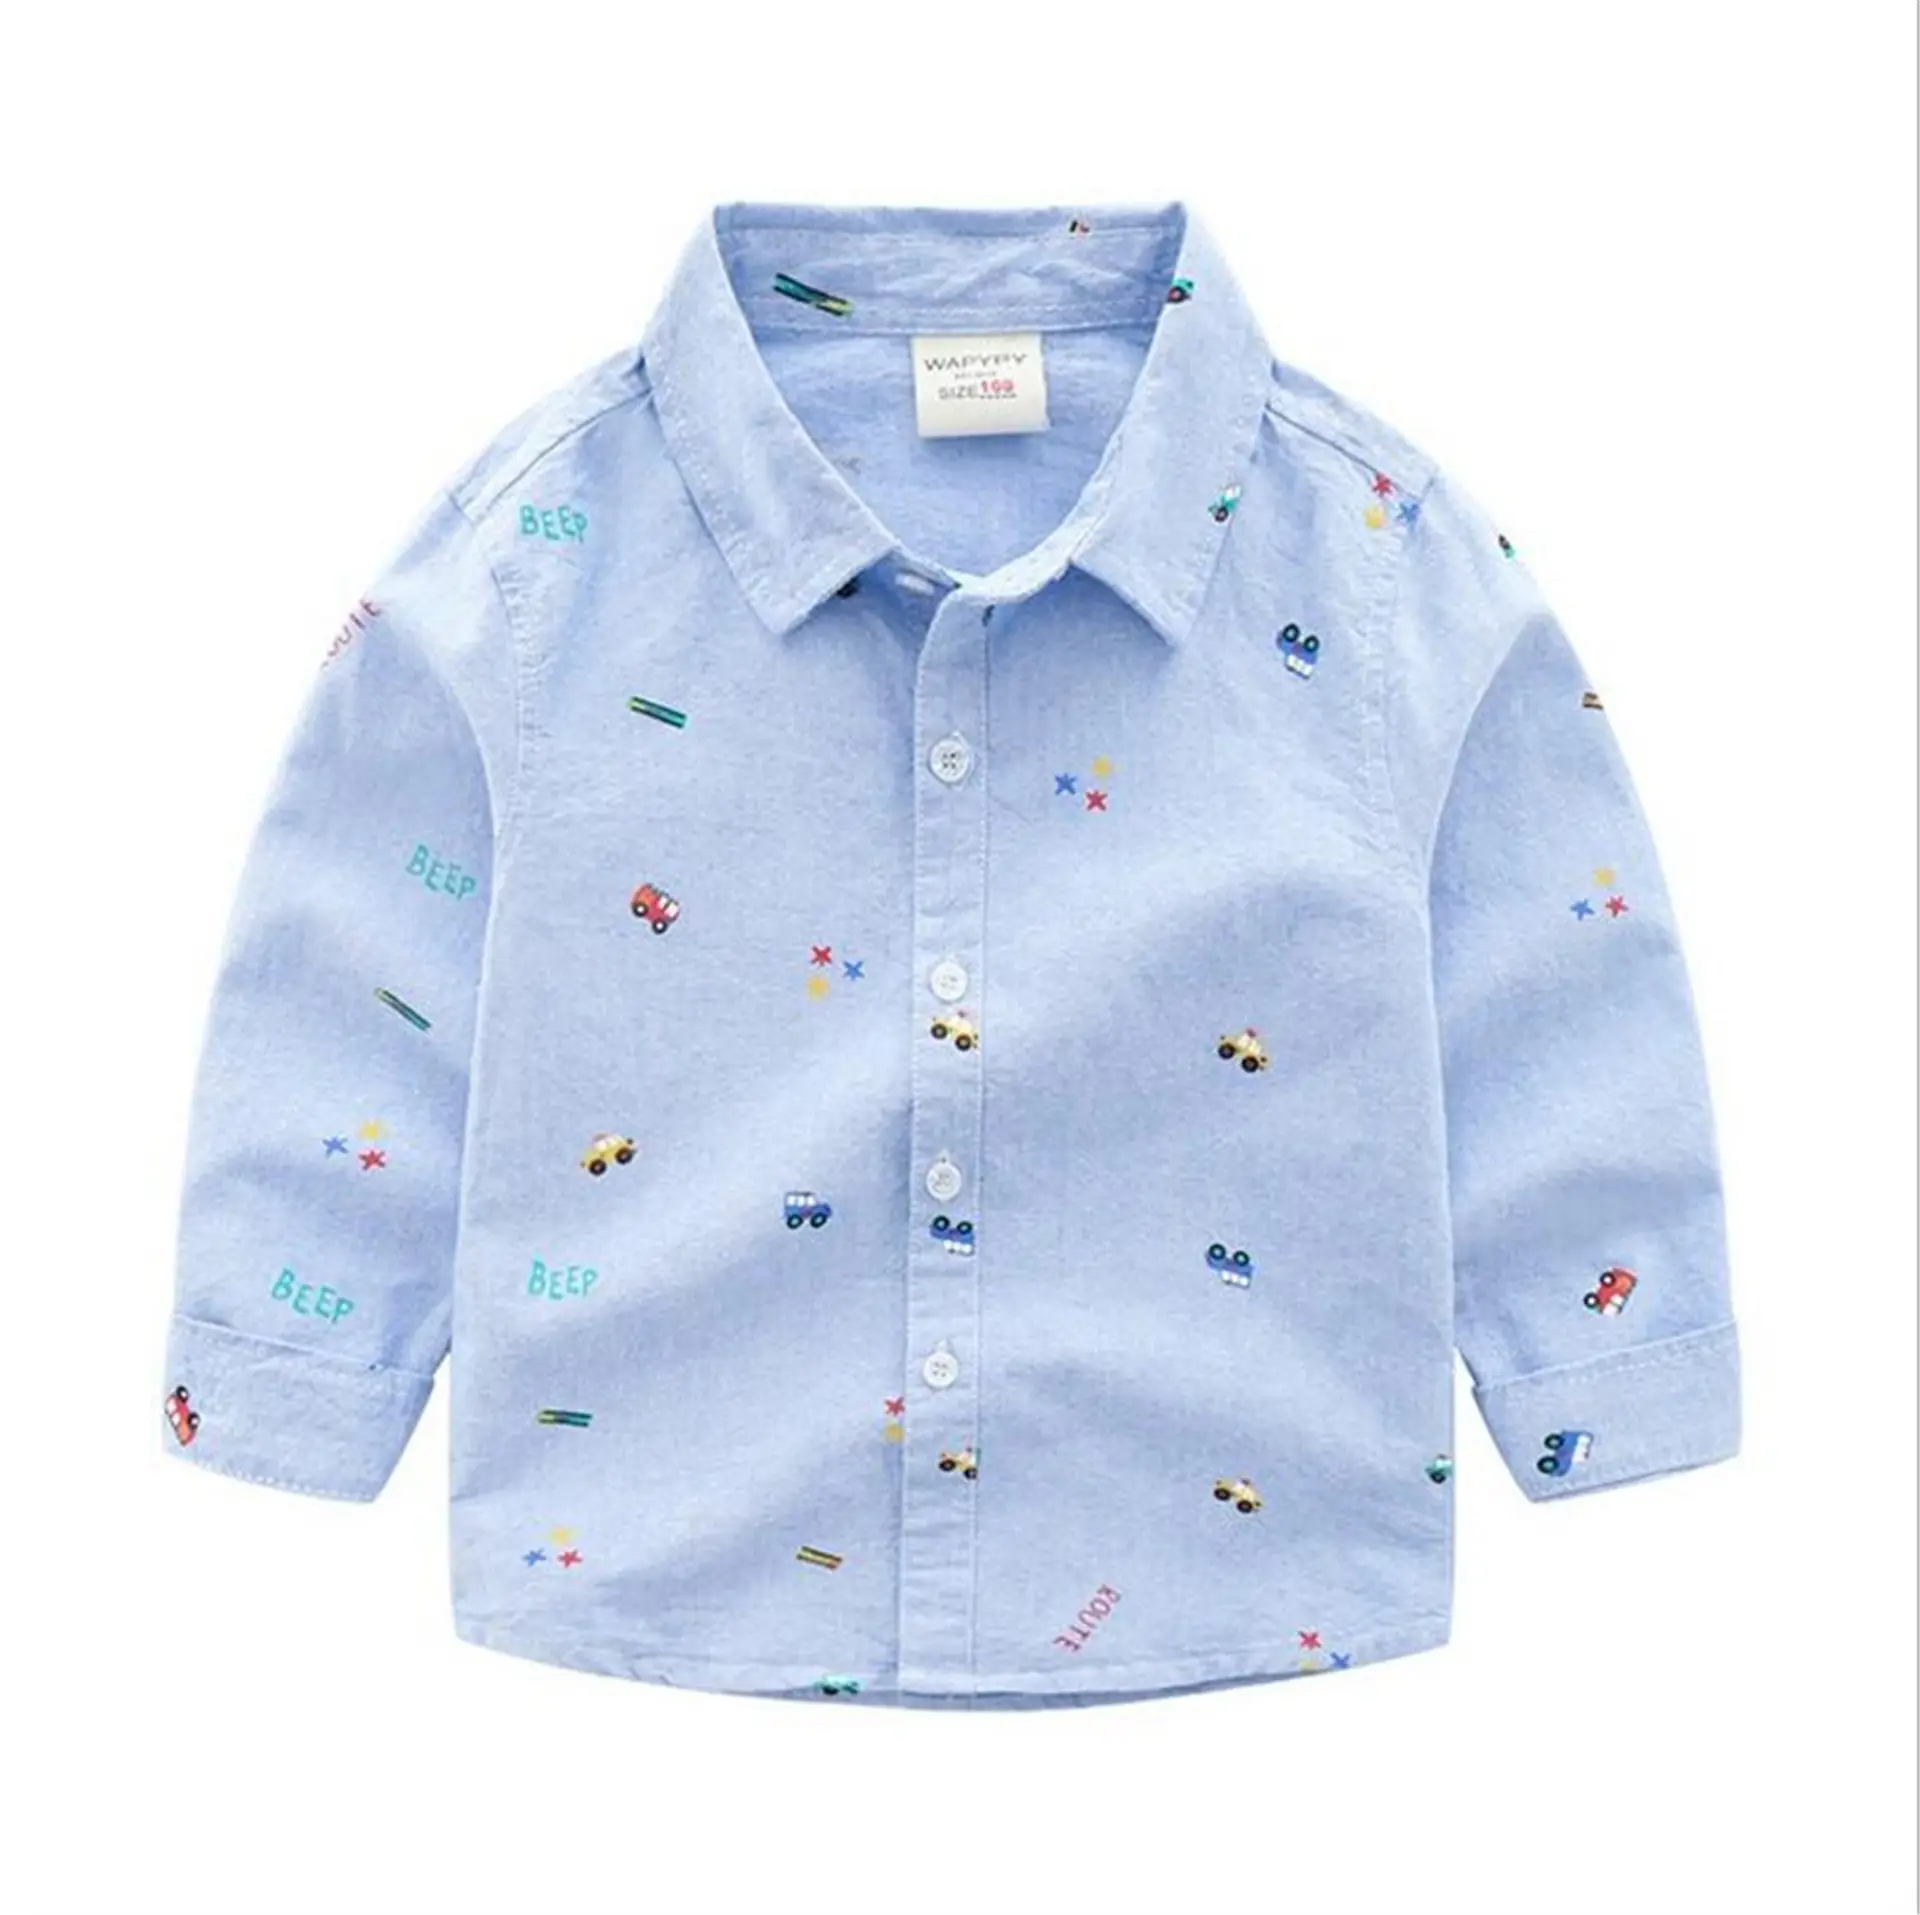 Hot sell full sleeves Baby Shirts & Tops